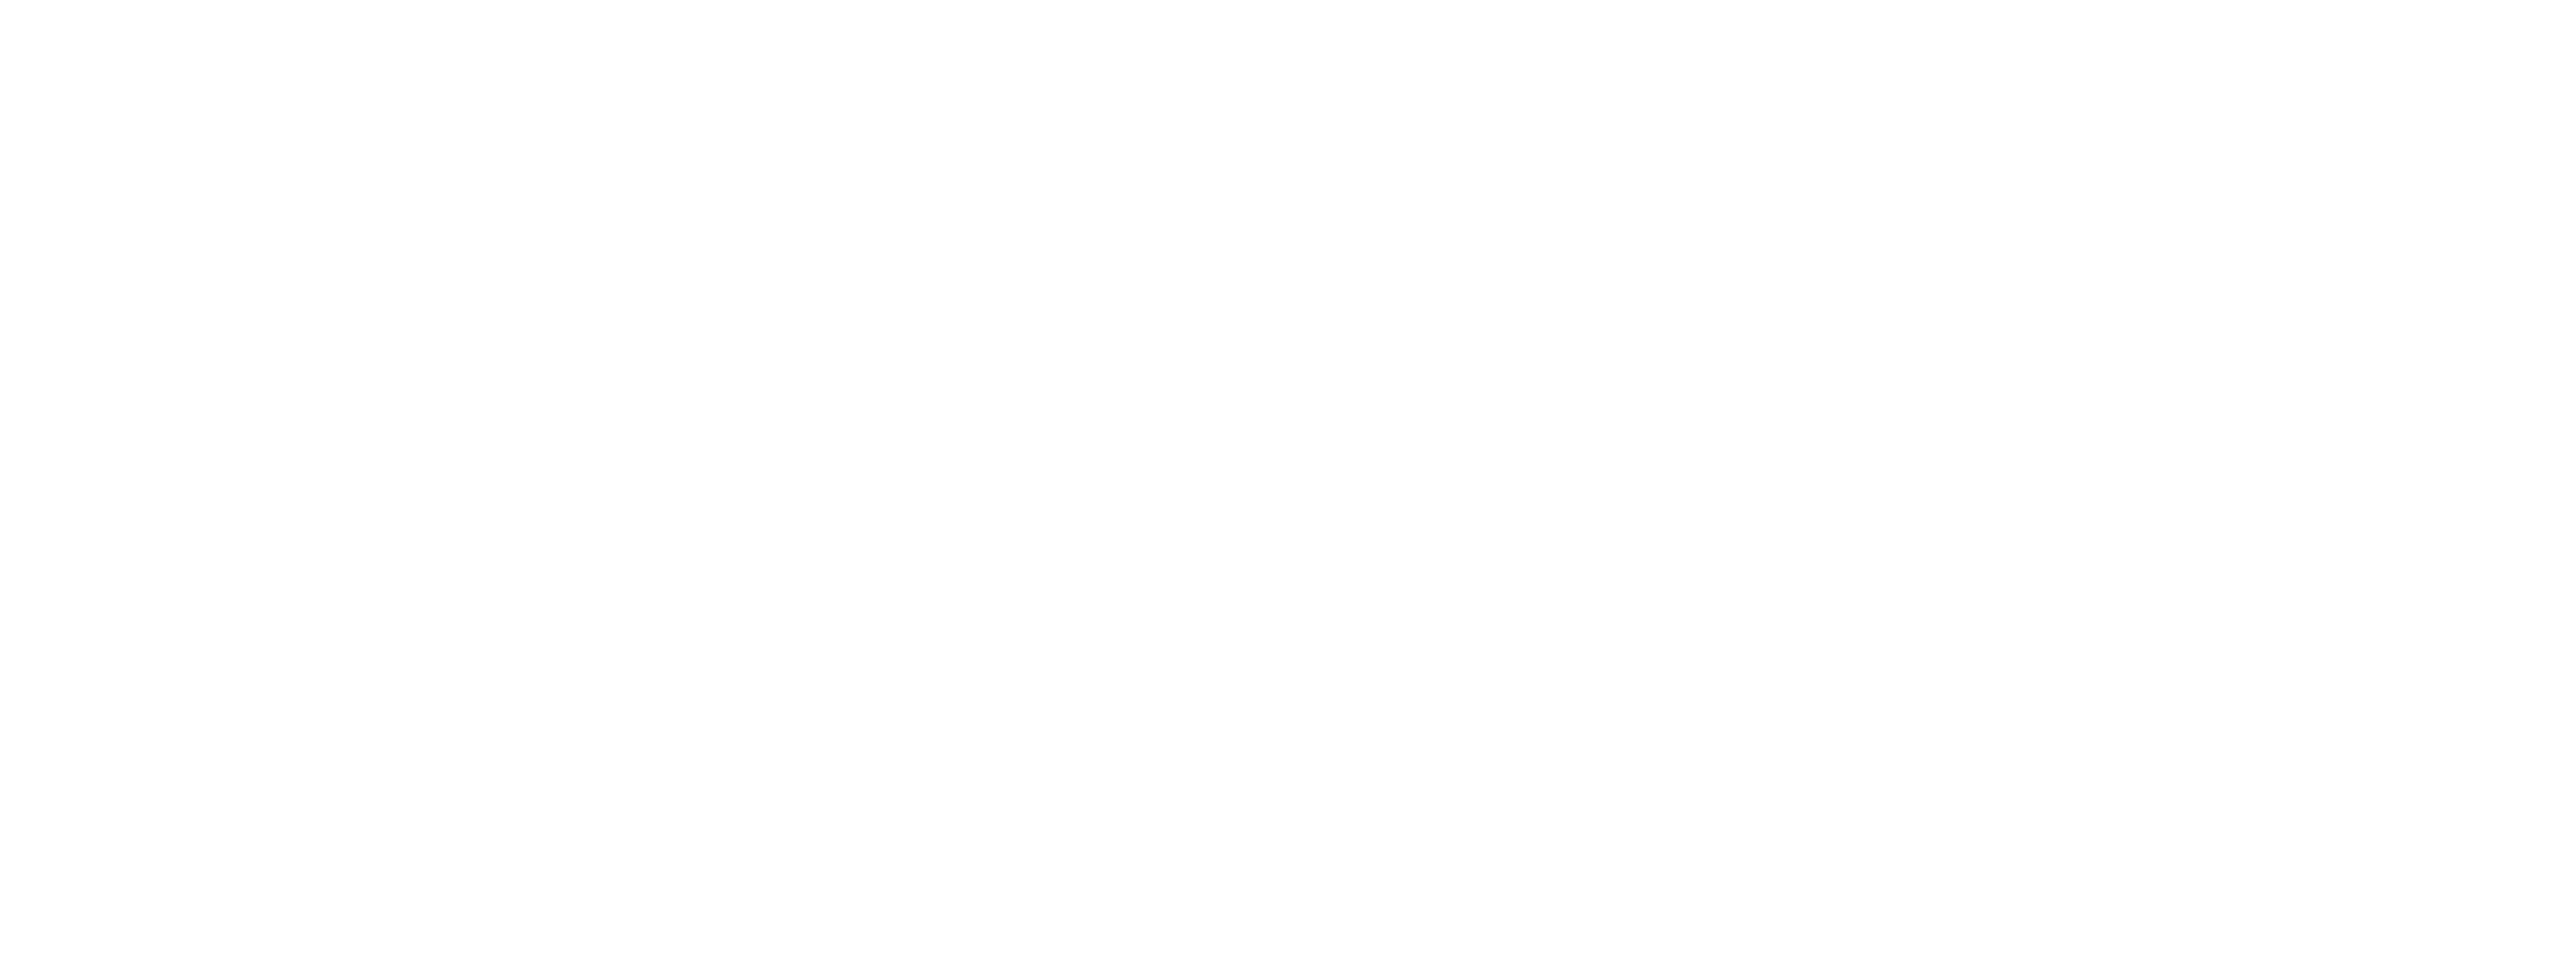 Lenovo Legion Logo